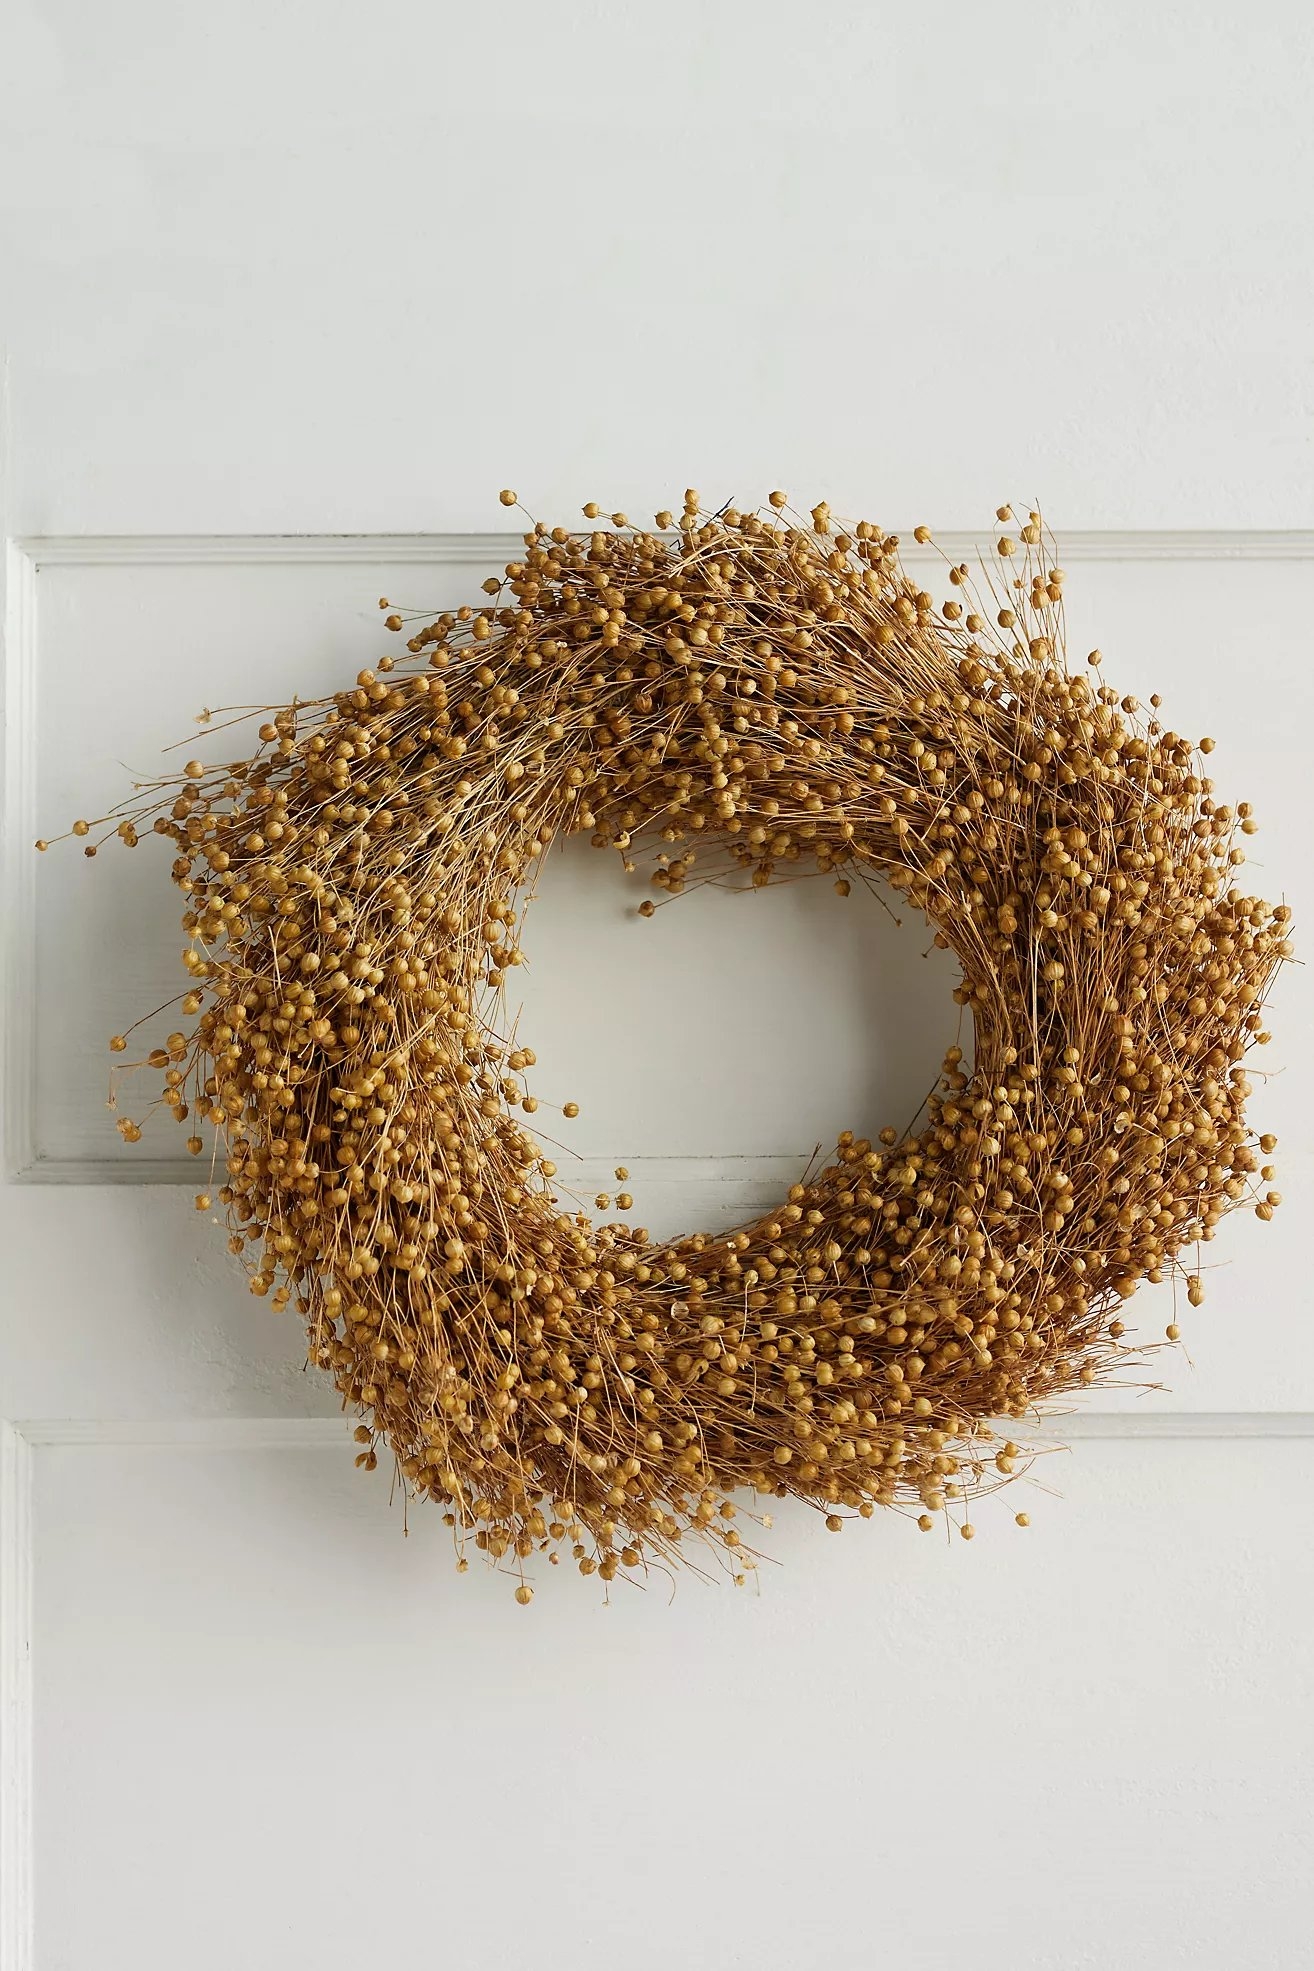 Dried Flax Wreath - Image 0